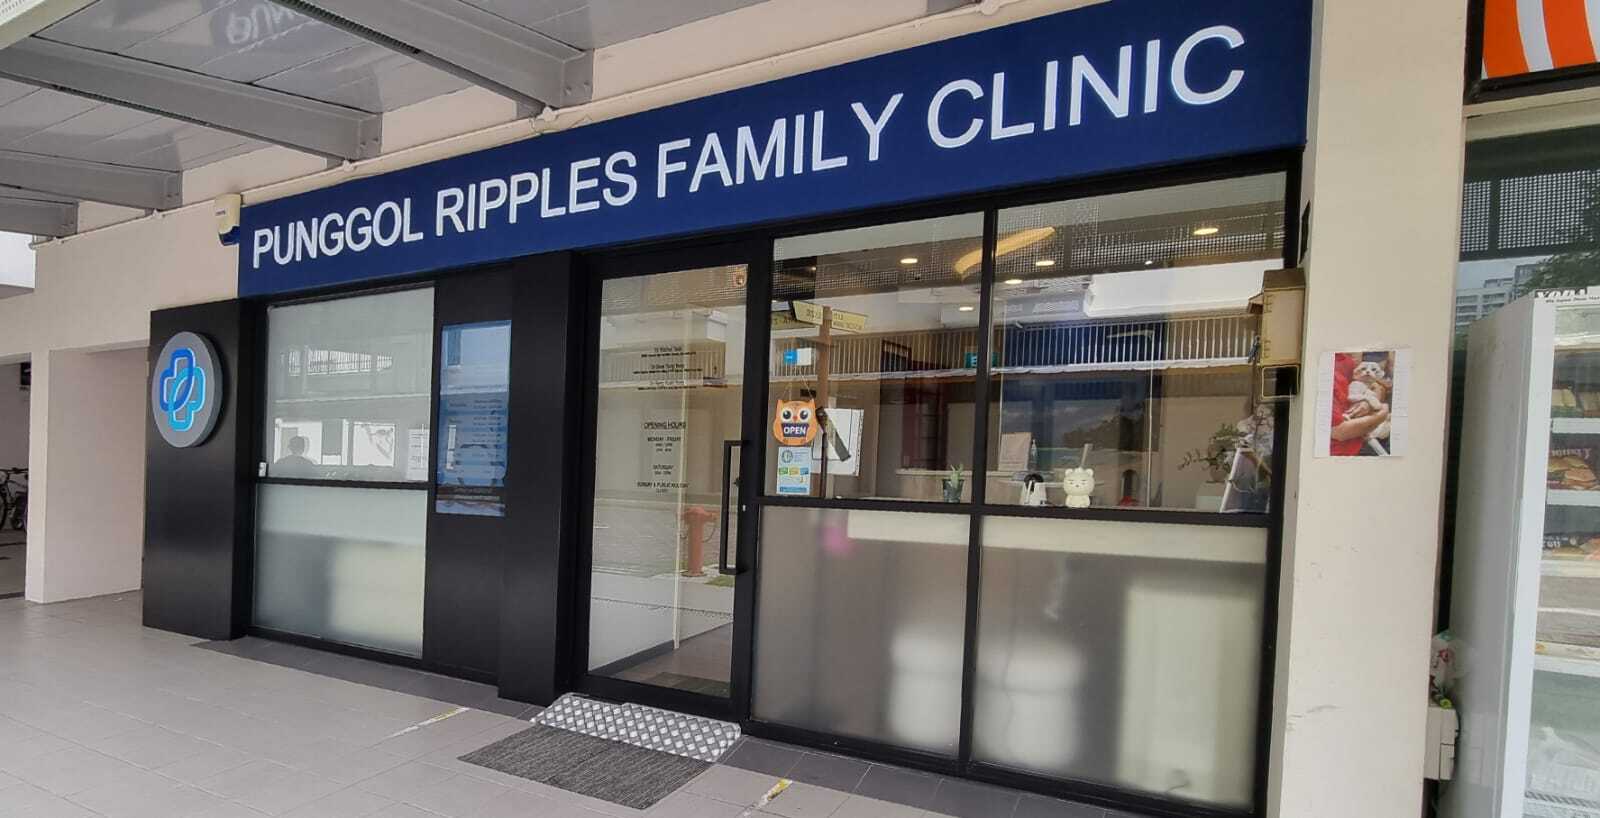 Punggol Ripples Family Clinic